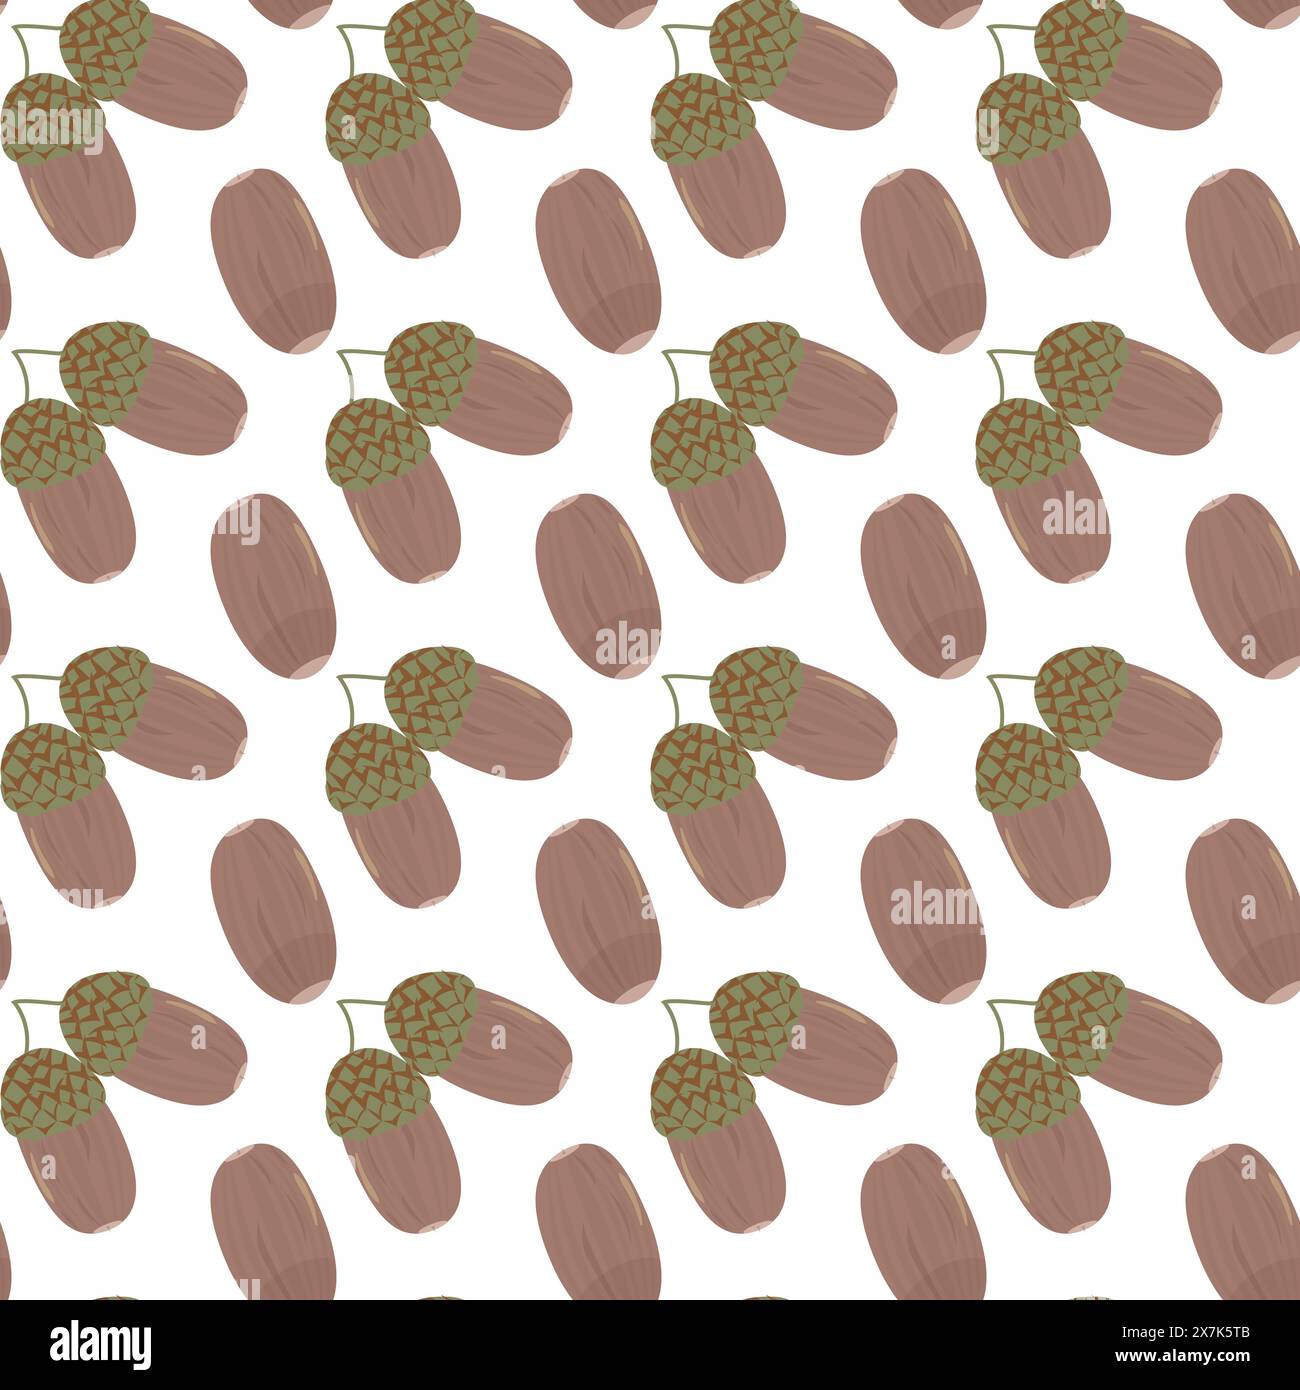 Acorn. Ripe oak tree seed. Simple seamless pattern. Vector illustration. Stock Vector